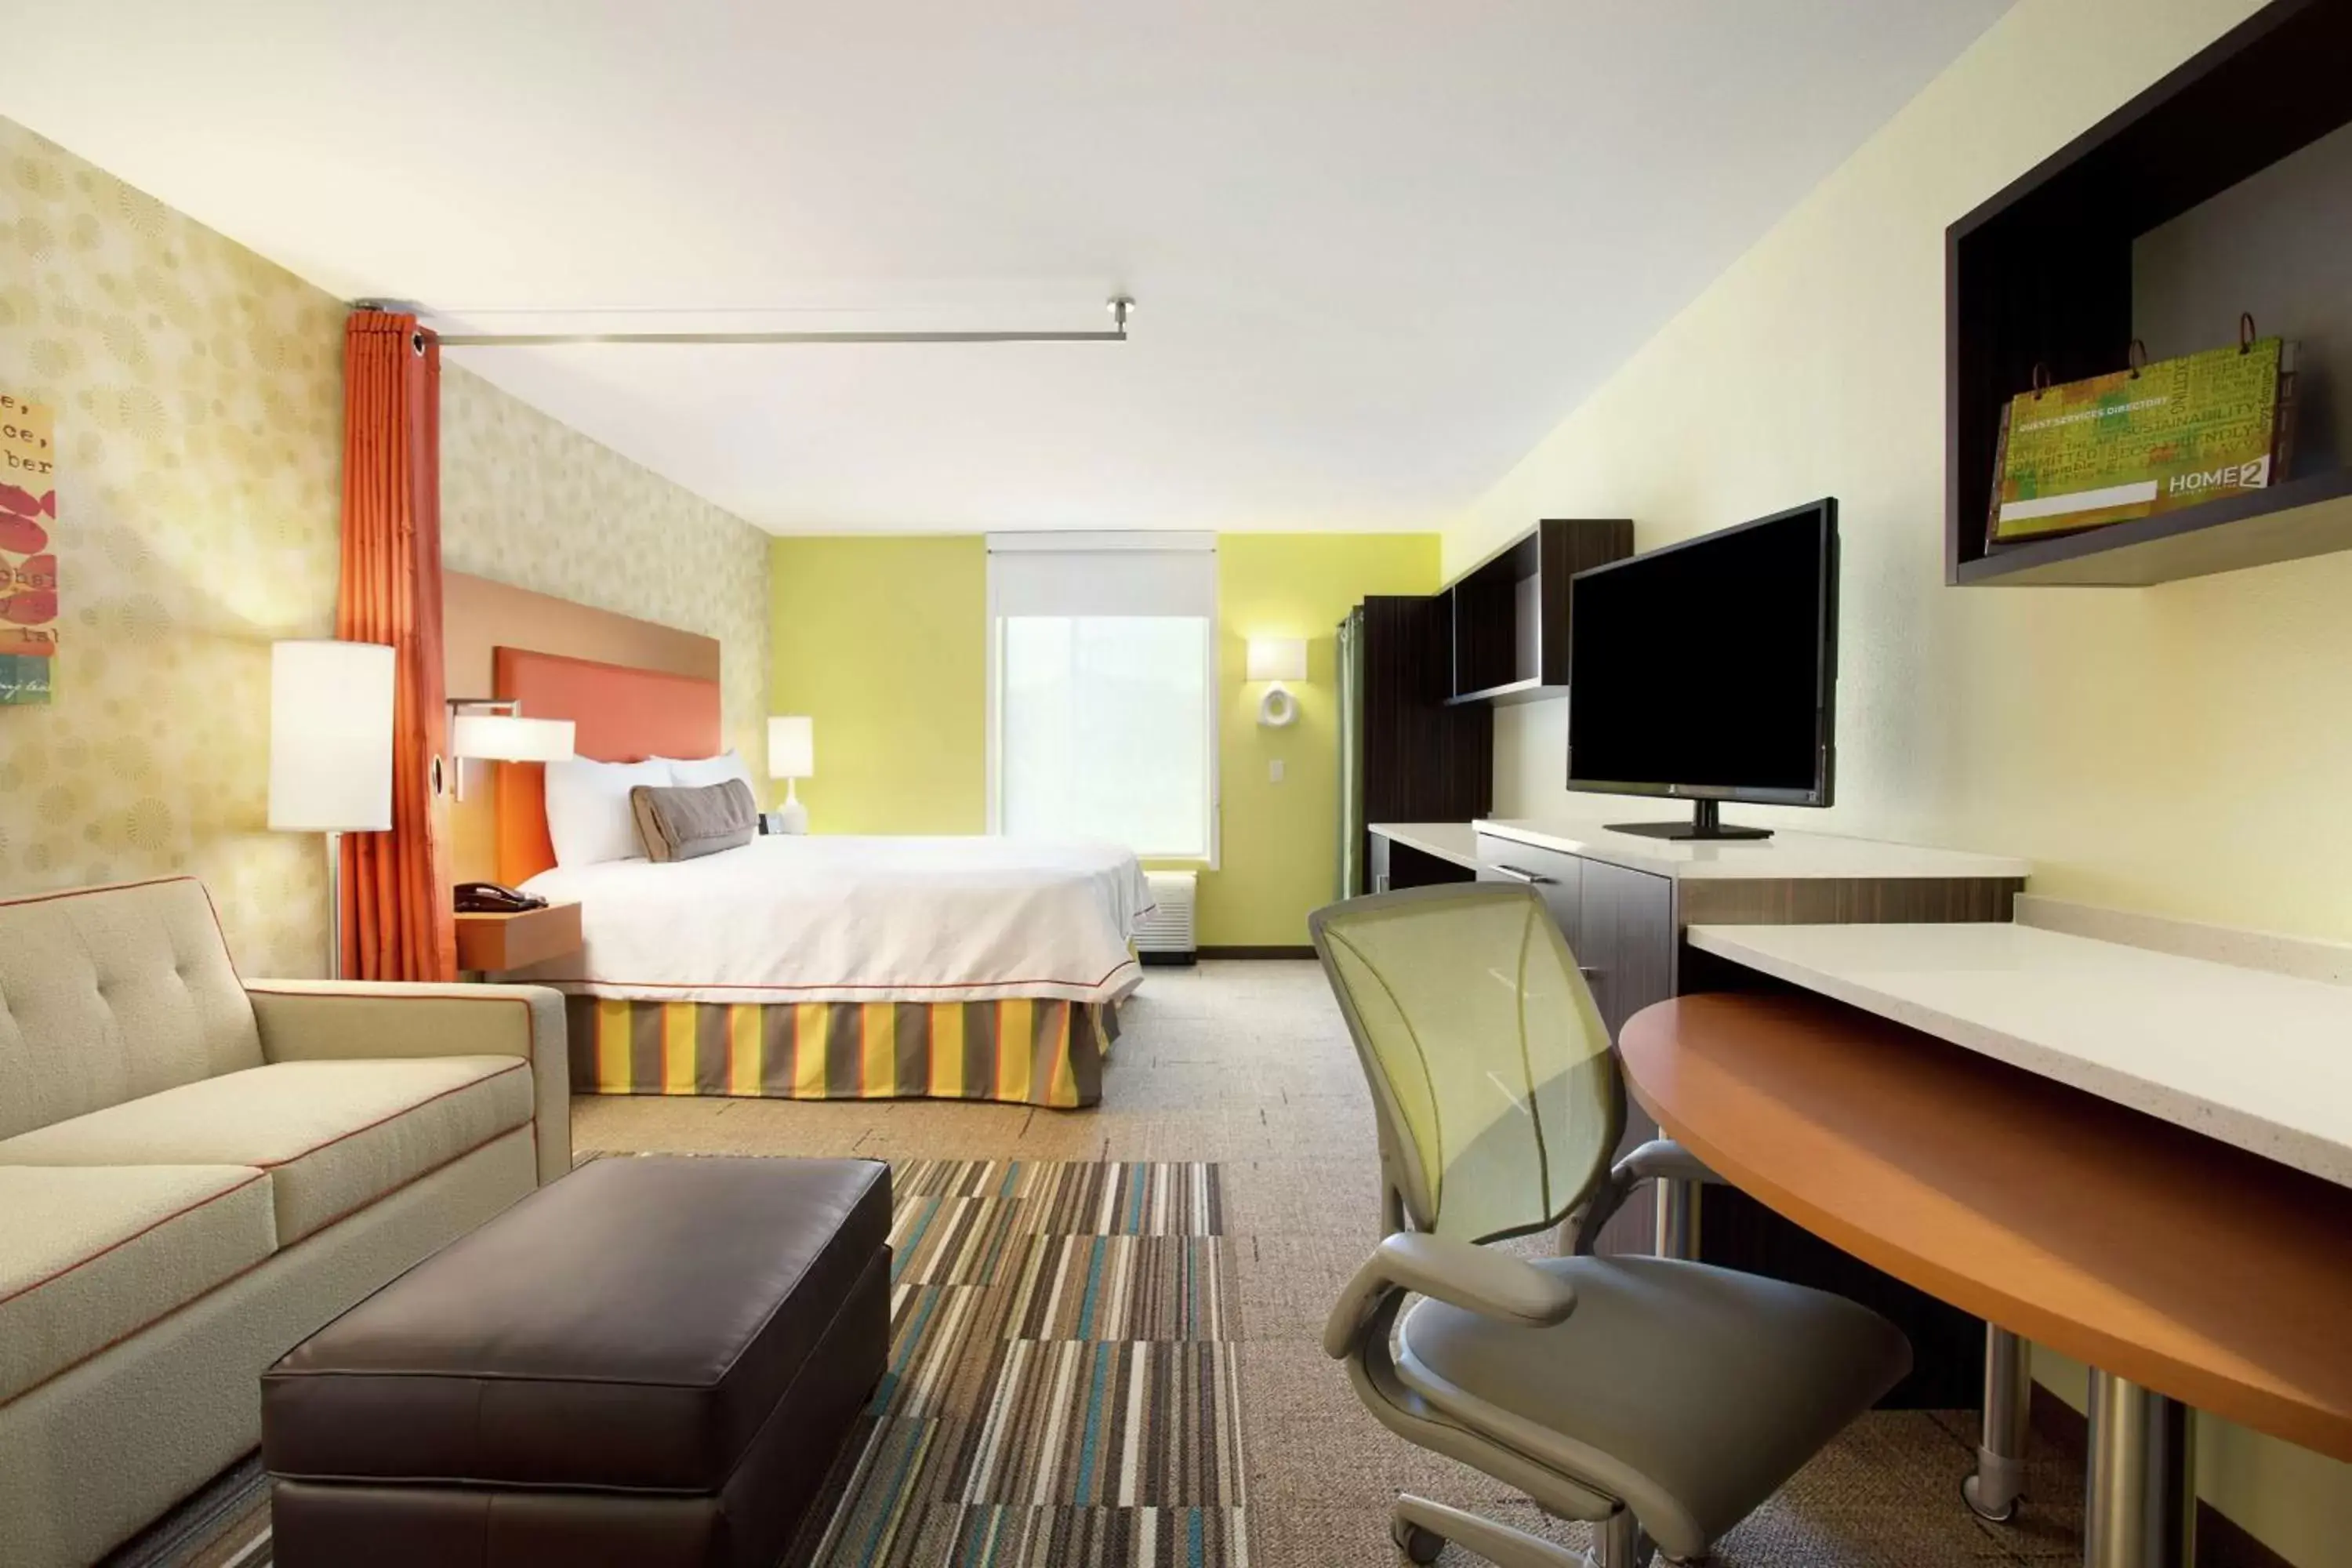 Bedroom, TV/Entertainment Center in Home2 Suites by Hilton San Antonio Airport, TX